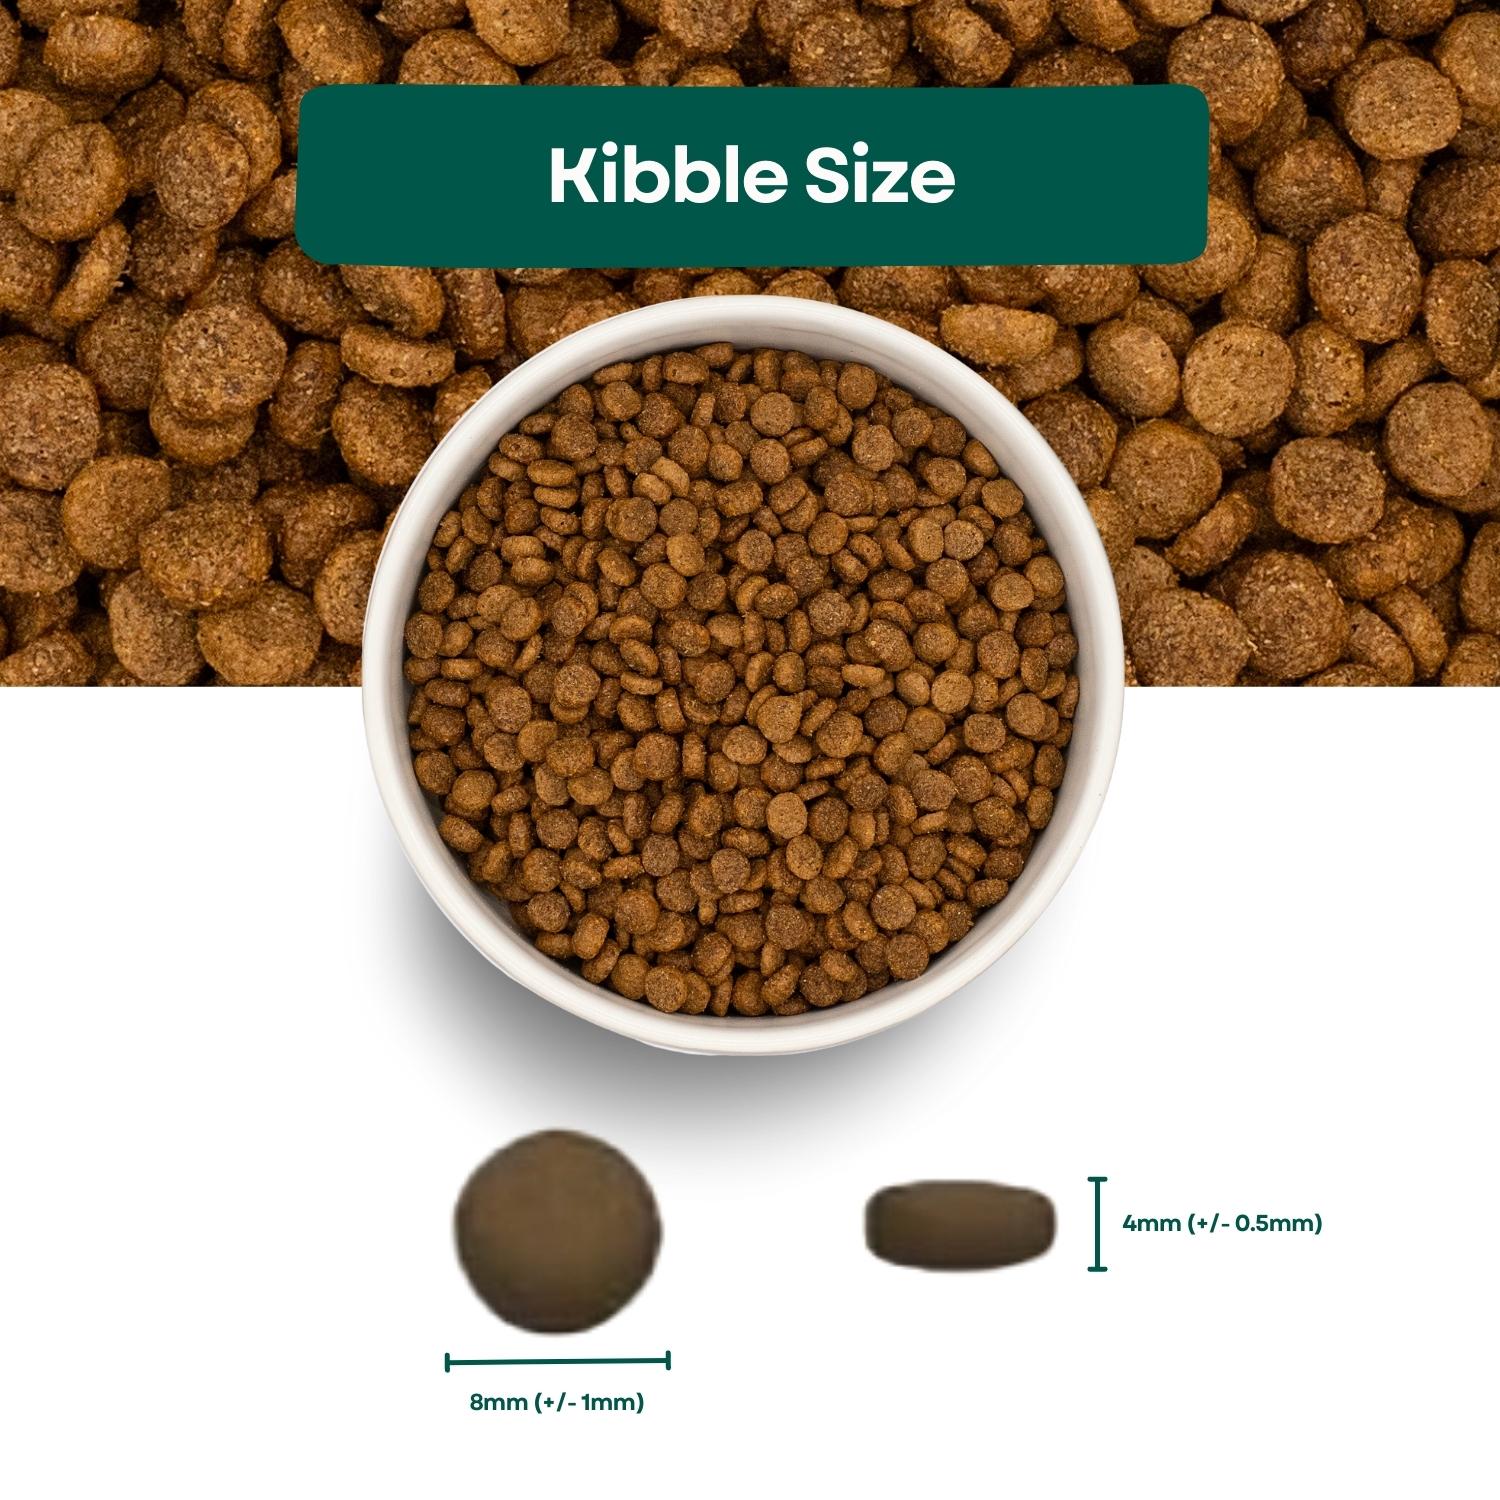 Kibble Size Super Premium Small Bite Adult Dog Food - Salmon & Potato